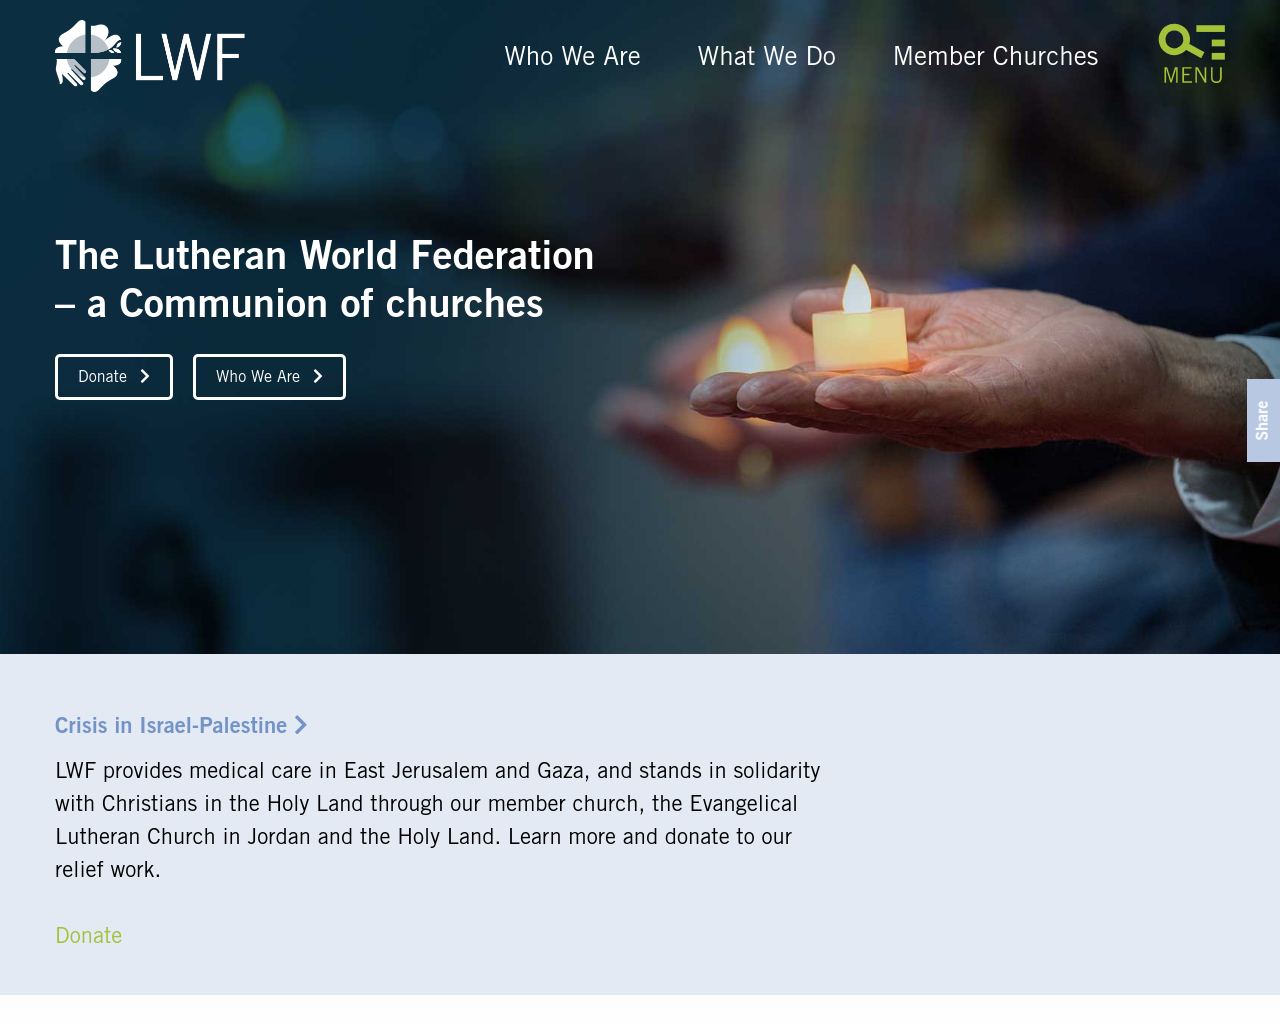 lutheranworld.org